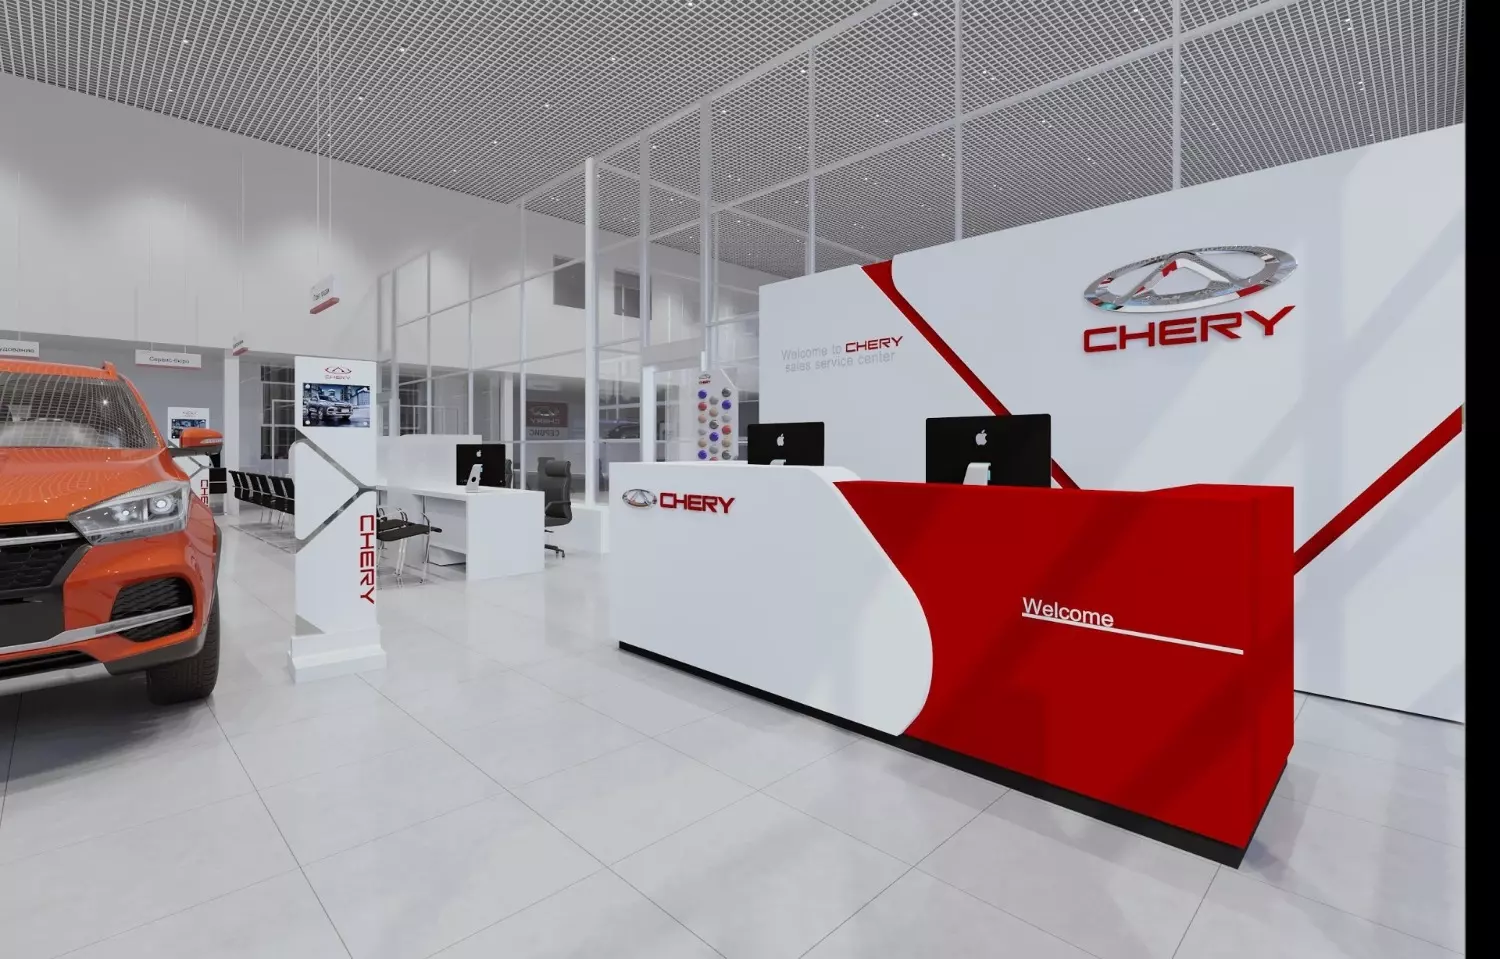 Китайская марка Chery проникла уже и на российские онлайн-рынки